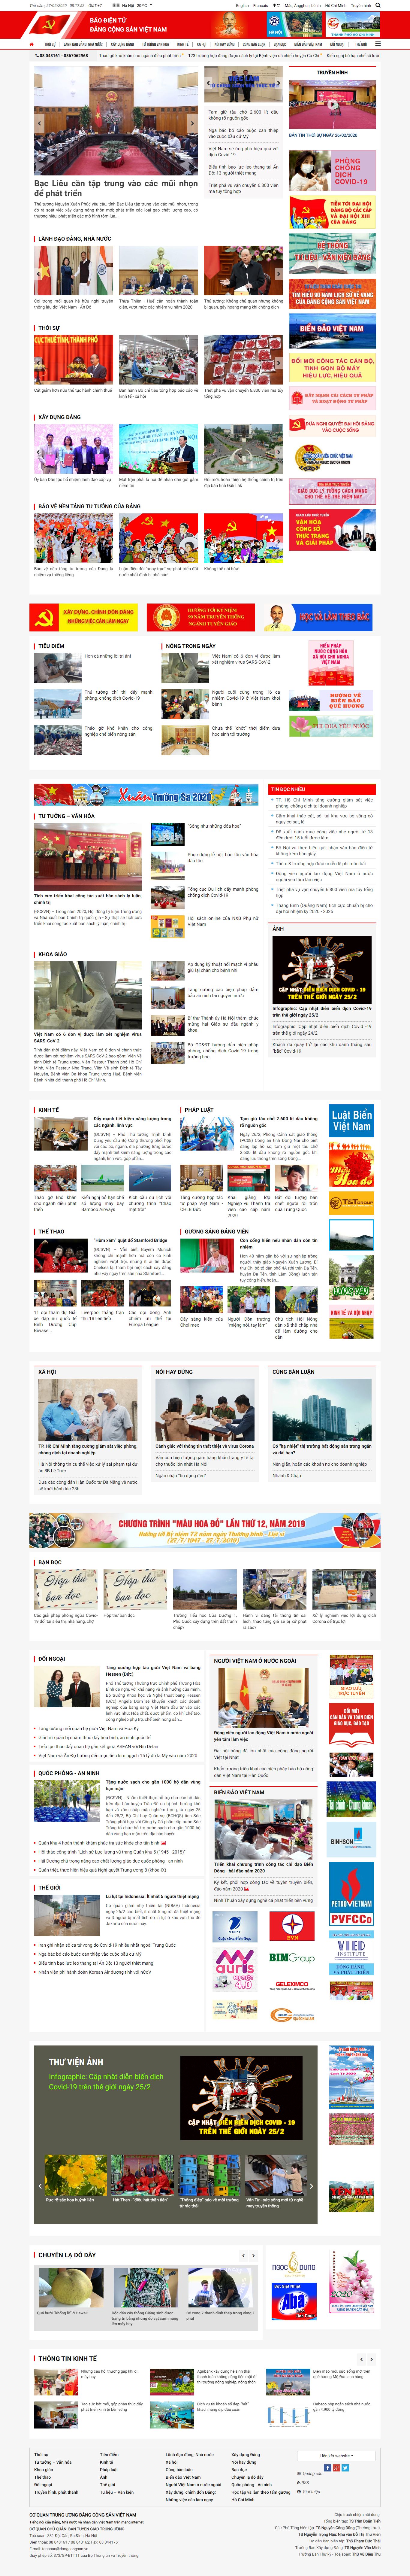 Thiết kế Website báo chí - dangcongsan.vn